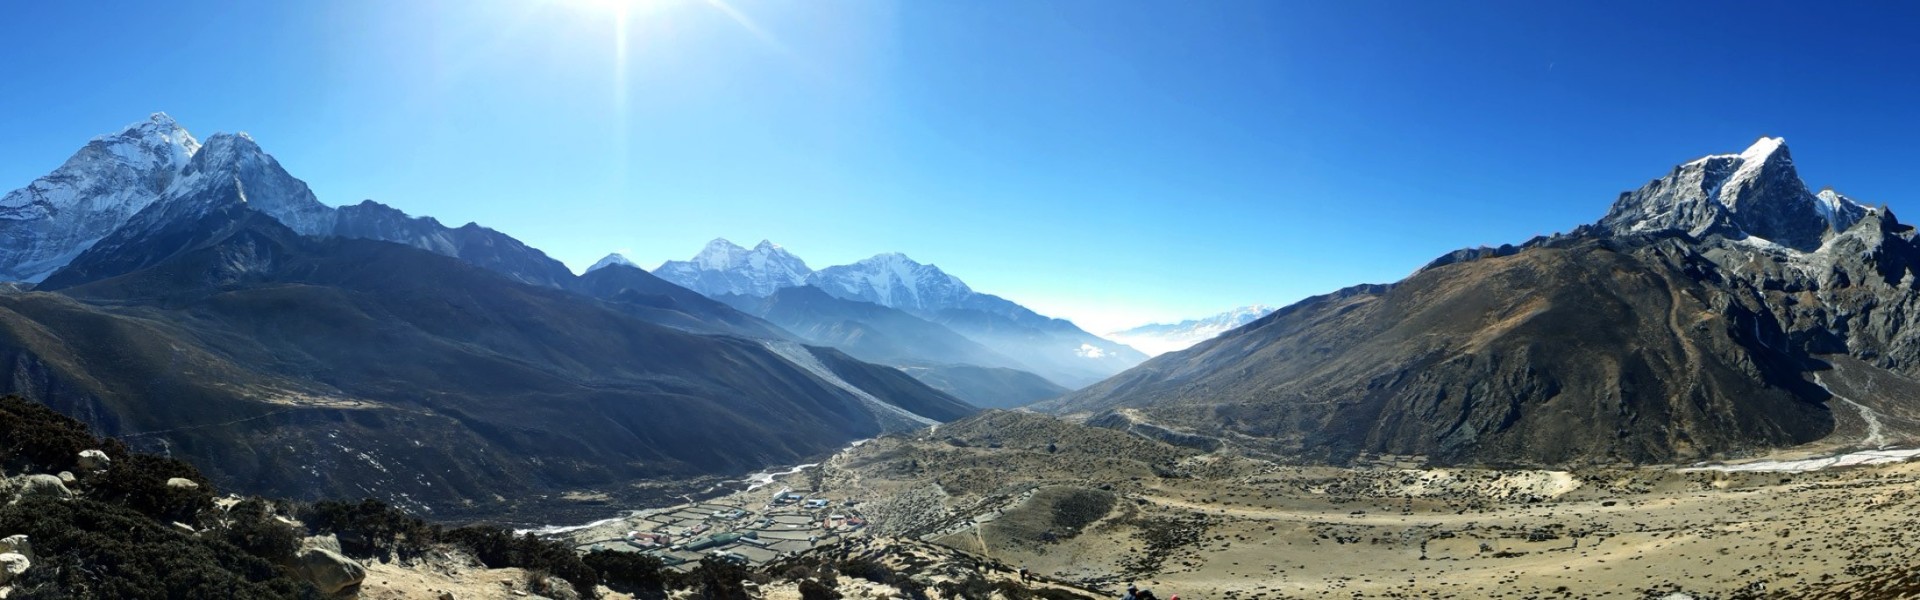 Mount Everest Base Camp Trekking Updates for 2020 / 2021